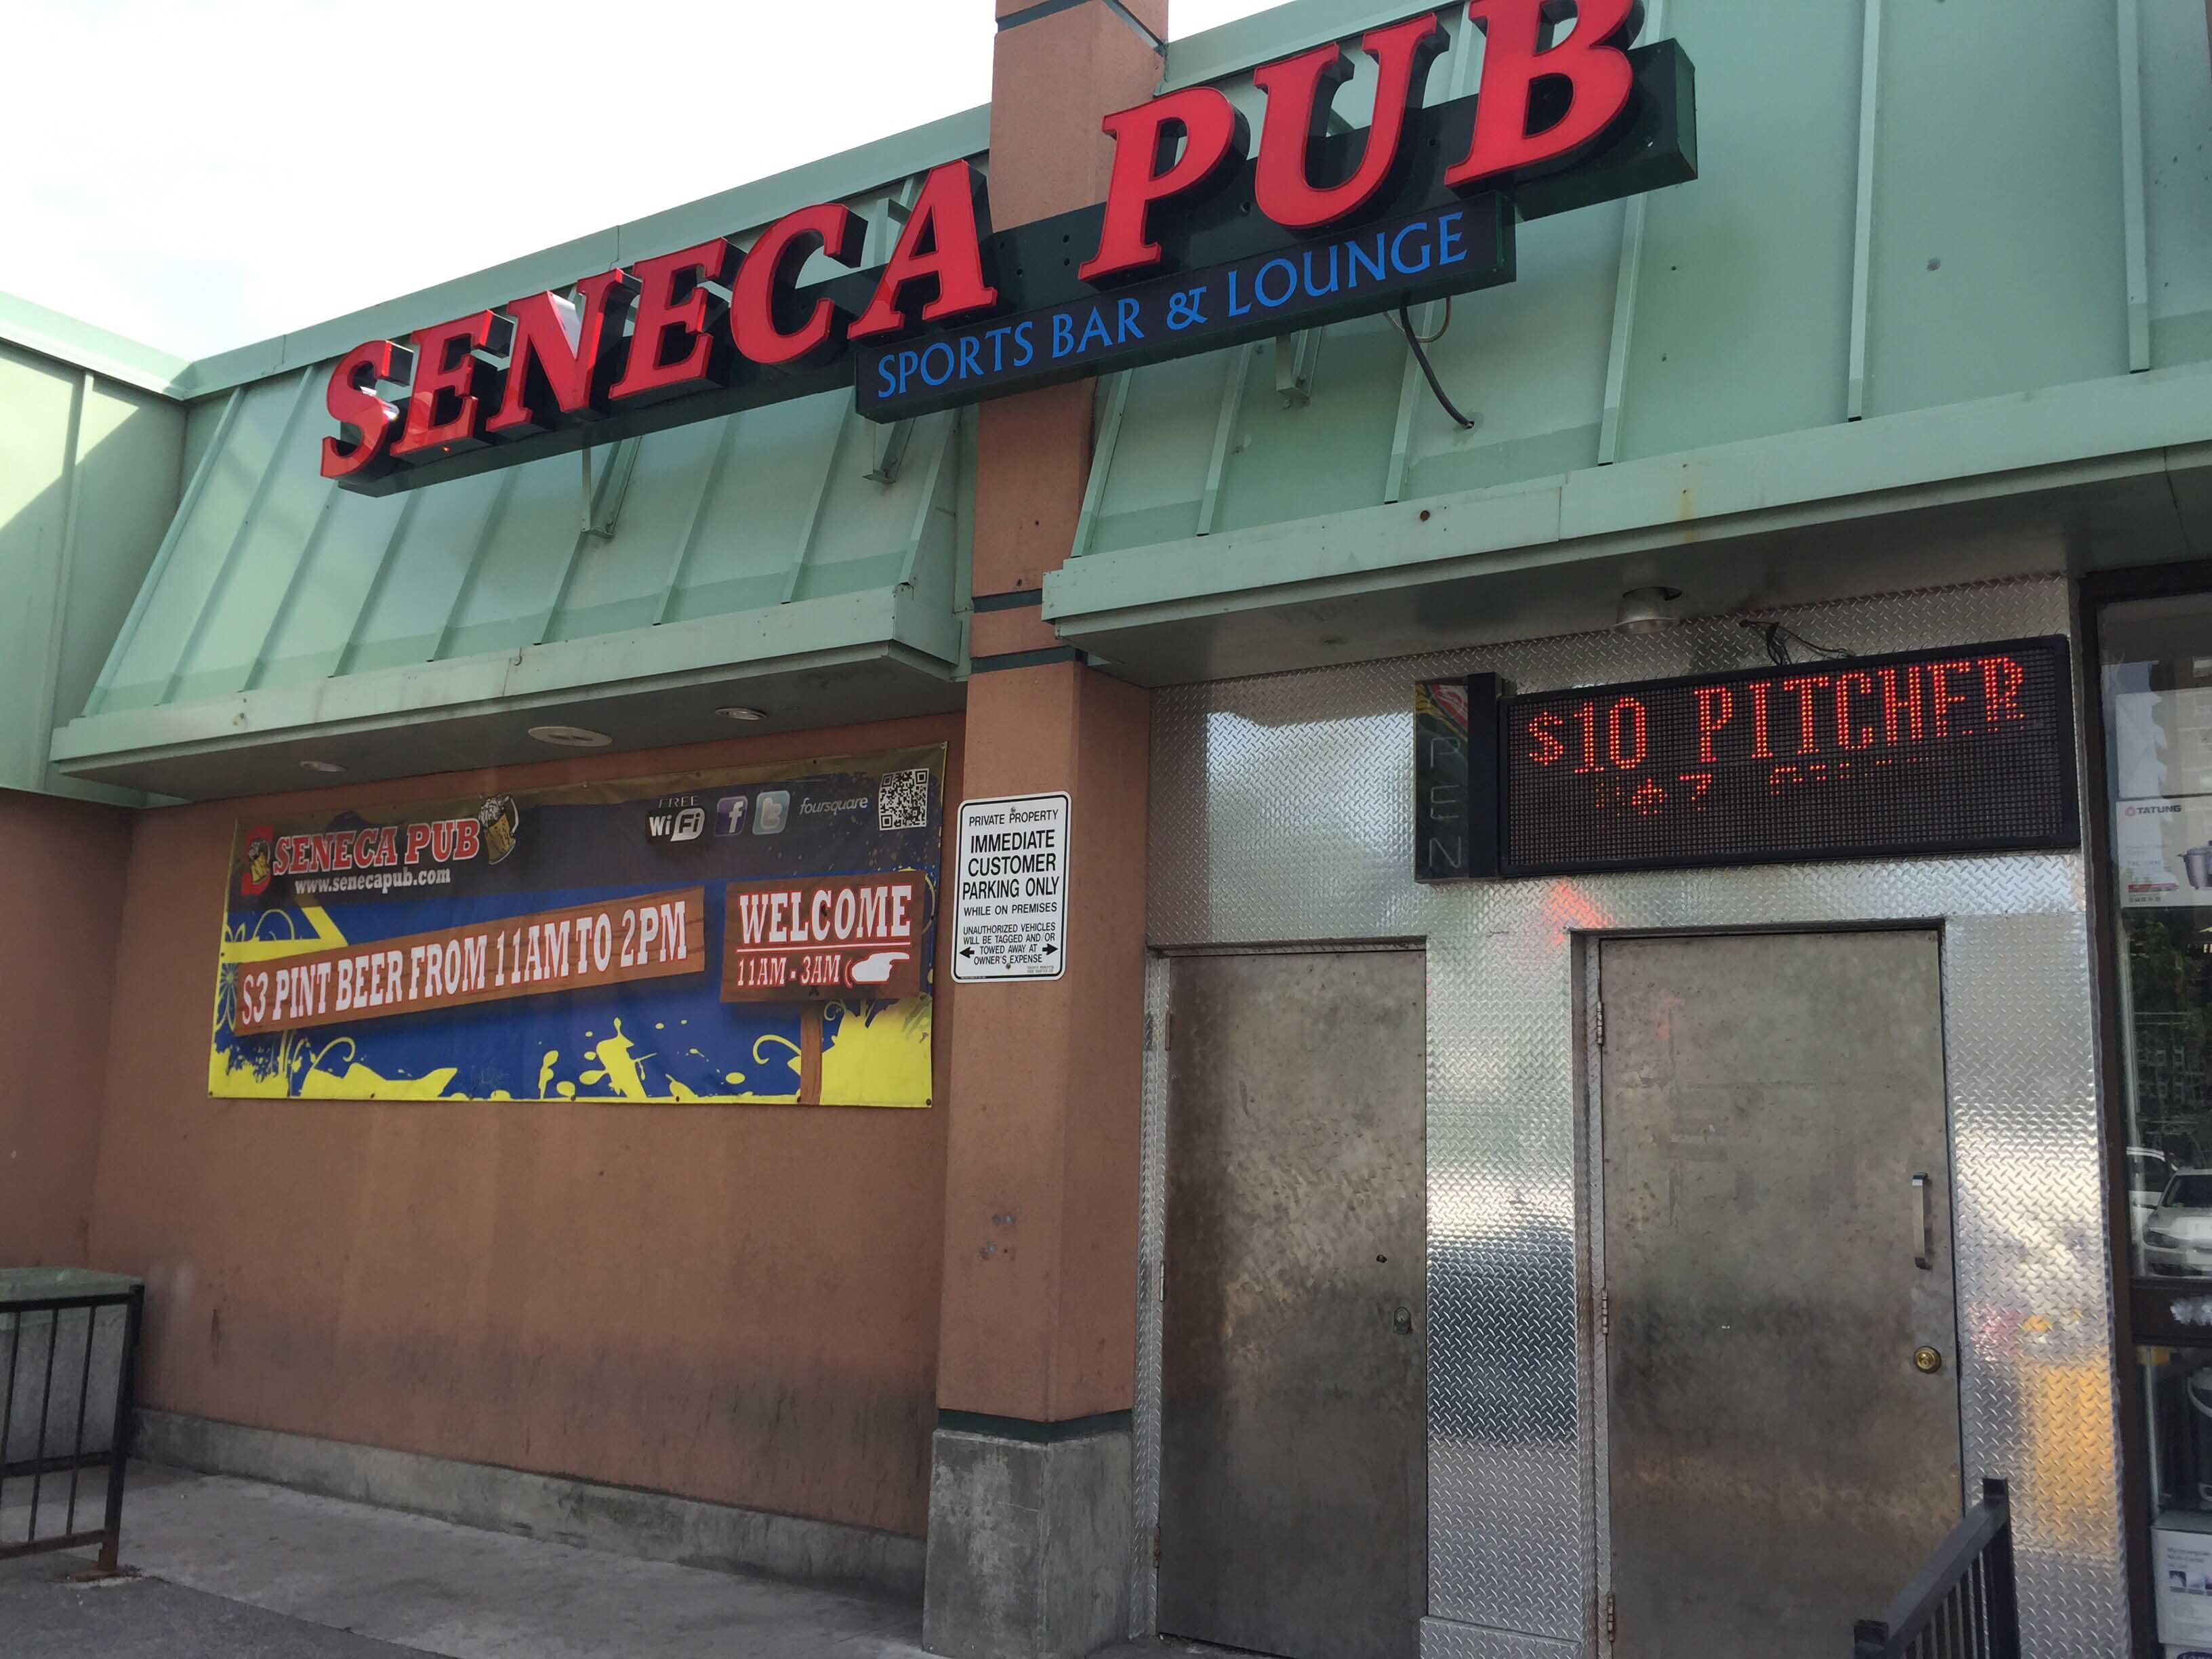 Seneca Pub